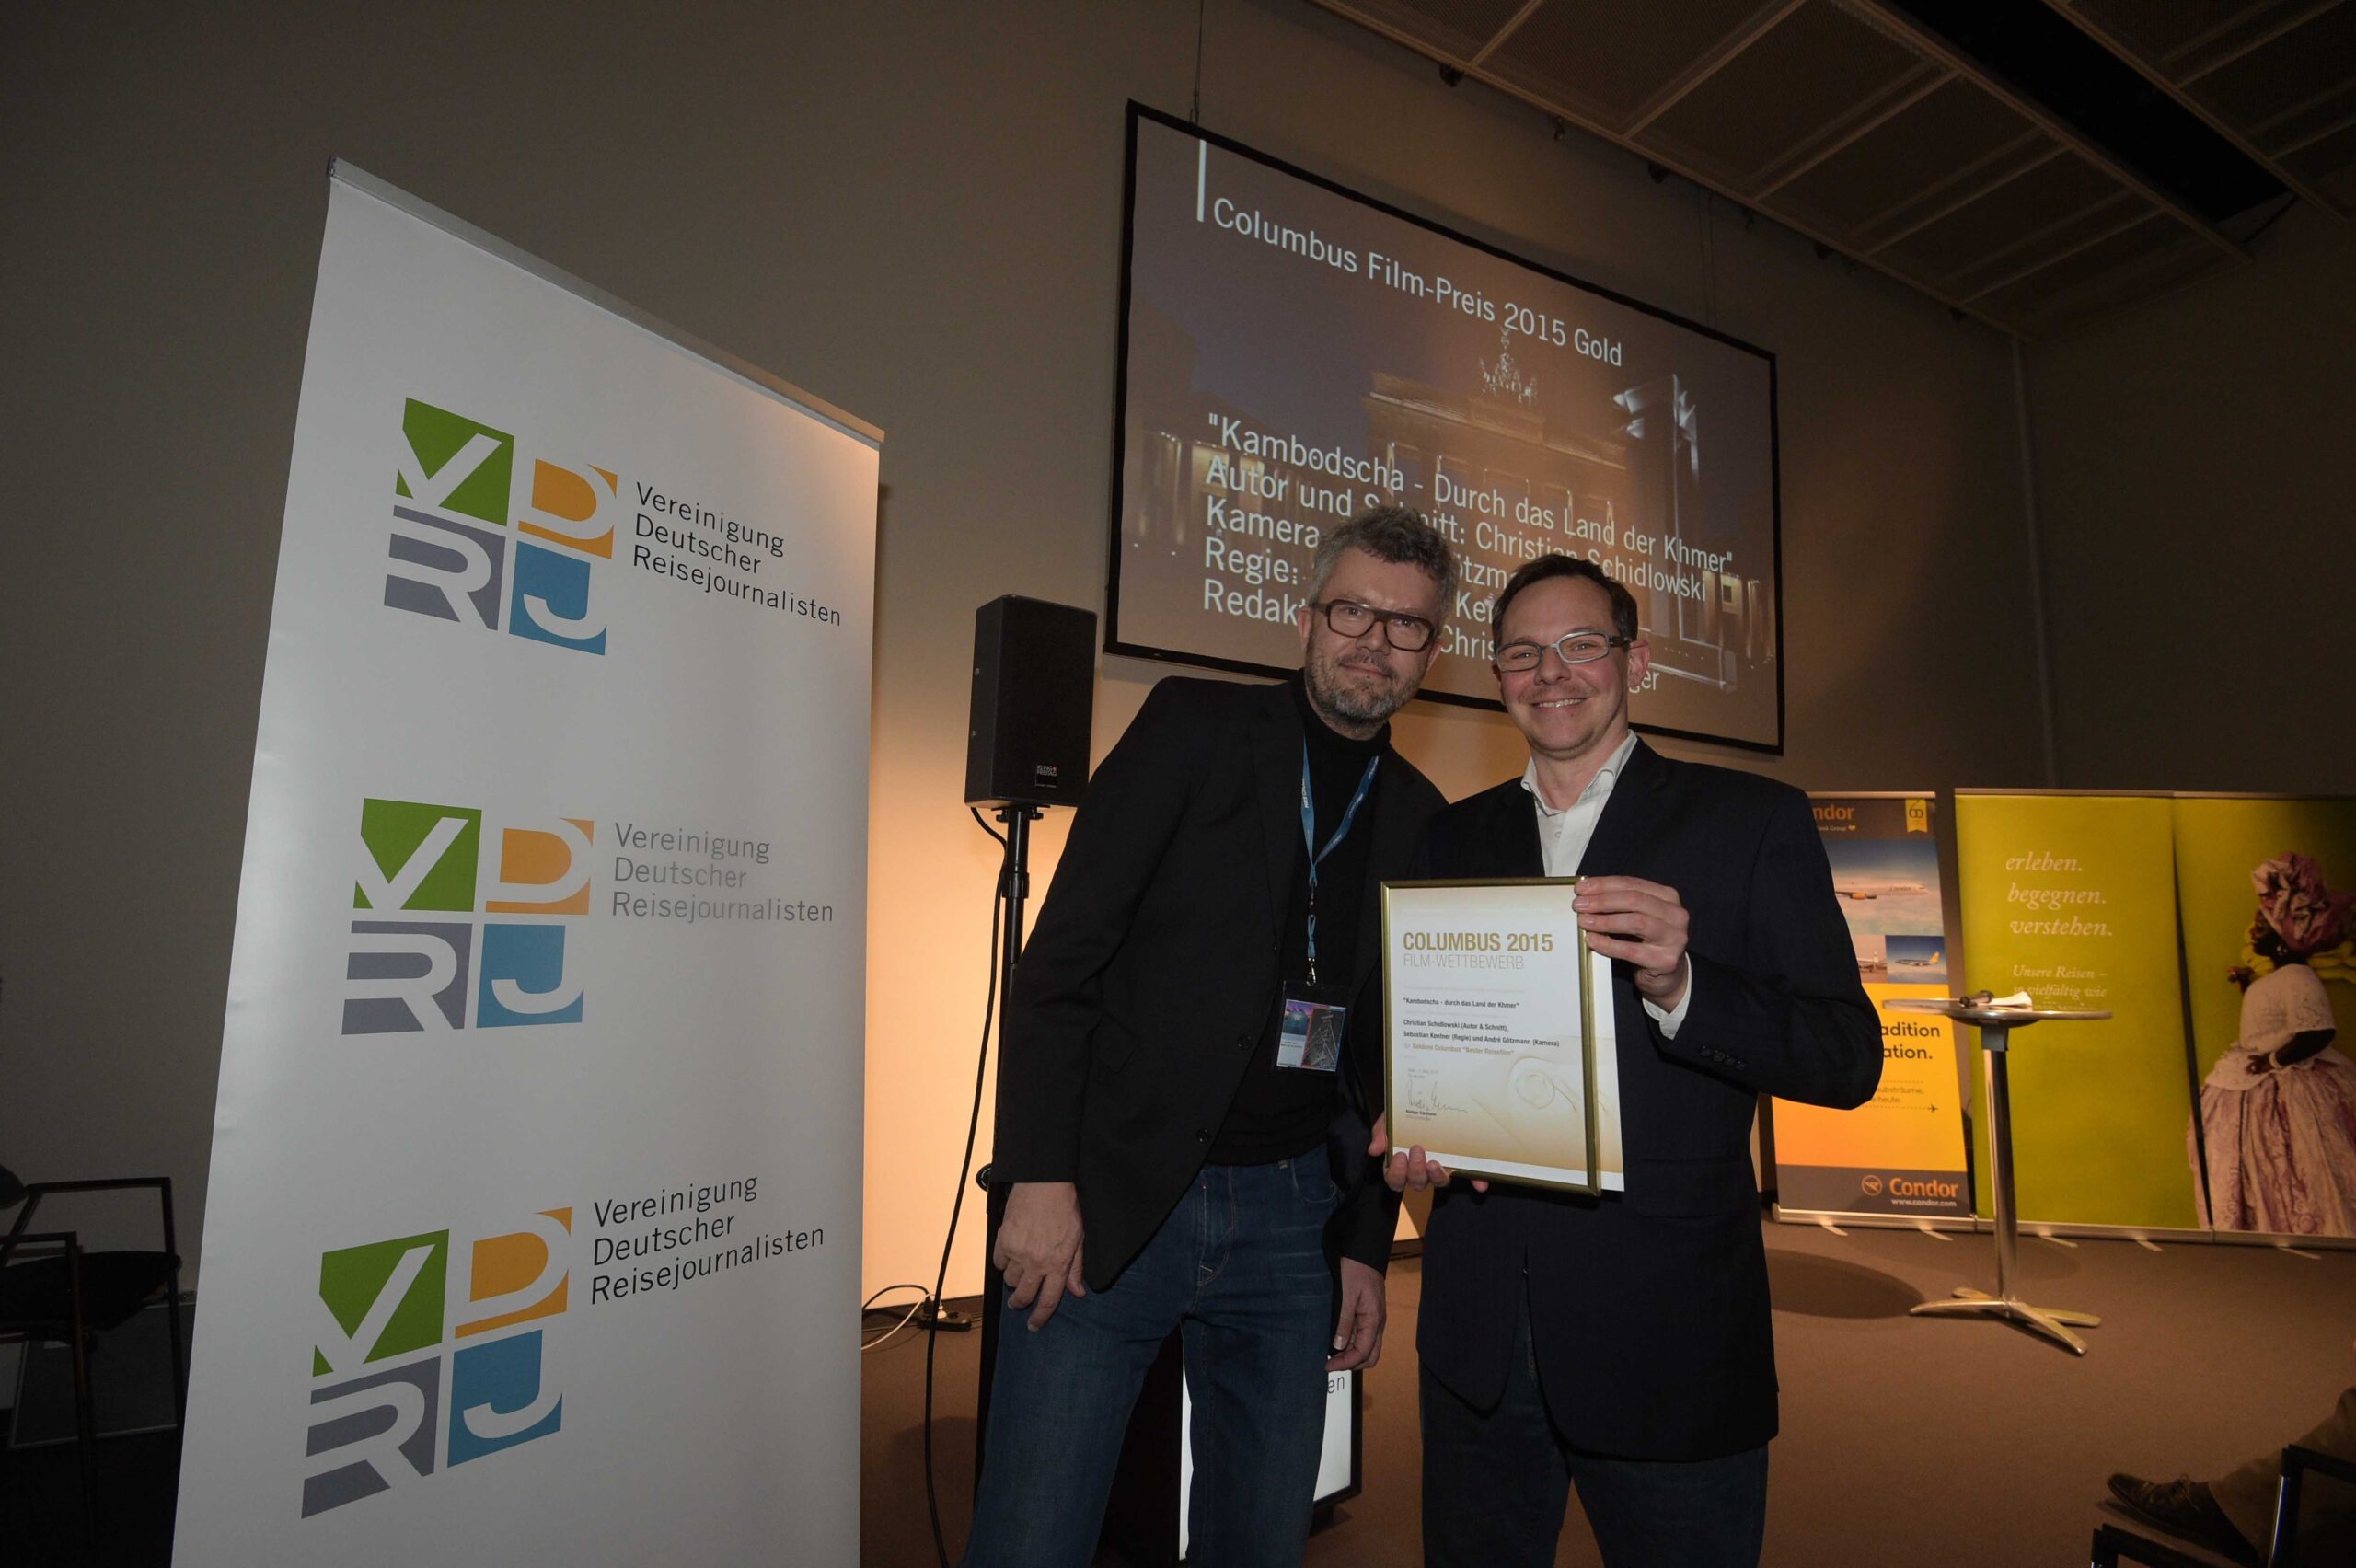 Columbus Film Preisverleihung 2015 Gold Christian Schidlowski ZDF Arte Thomas Radler web